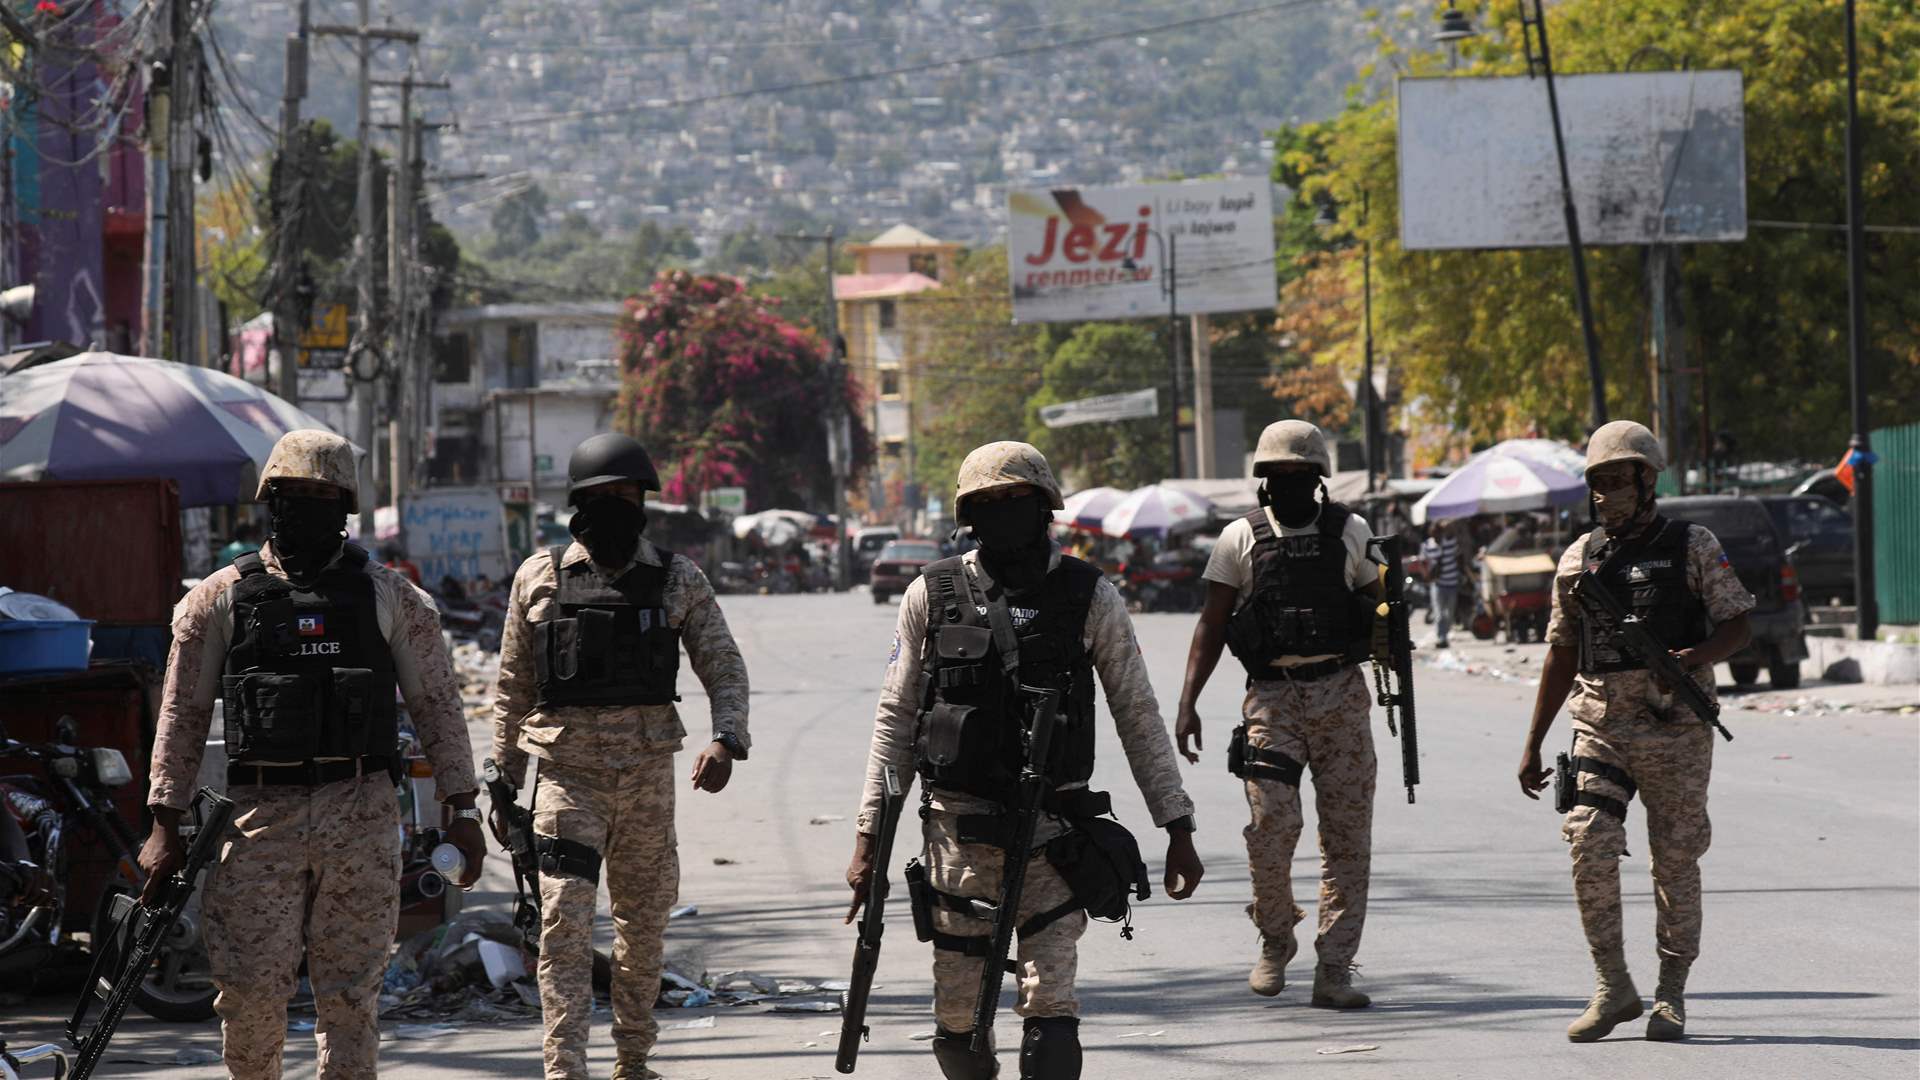 EU announces evacuation of its diplomatic staff from Haiti